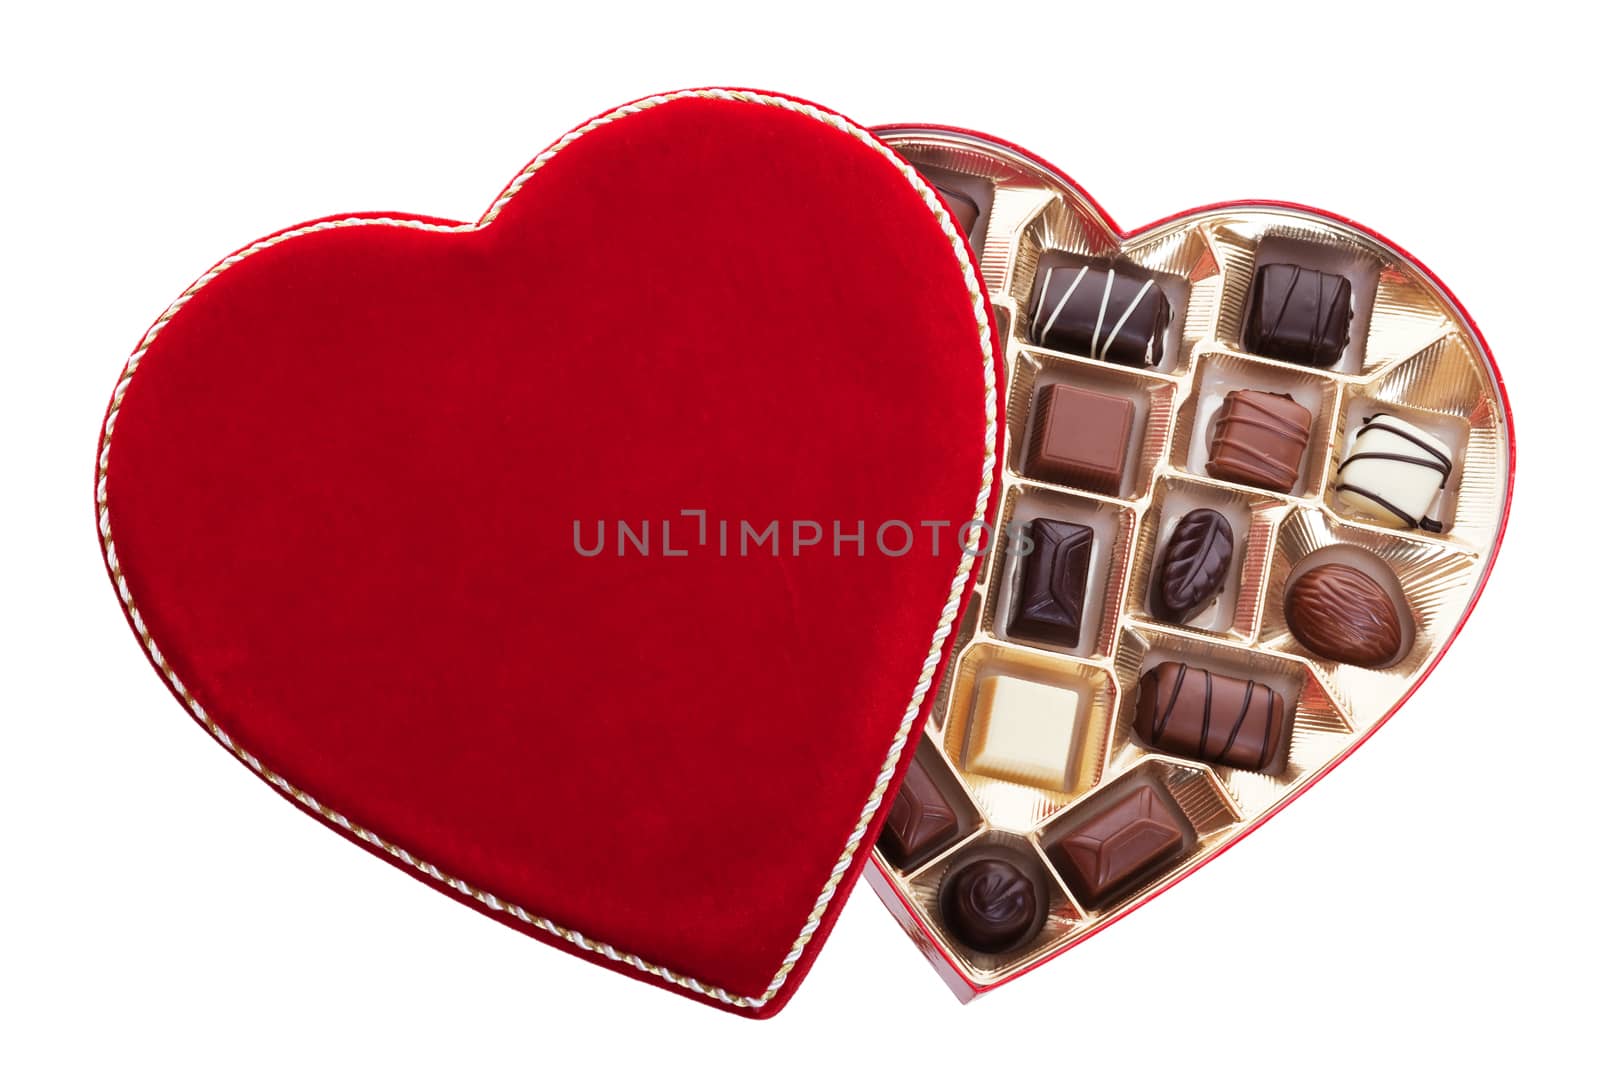 Red velvet, heart shaped box of chocolates.  Shot on white background.